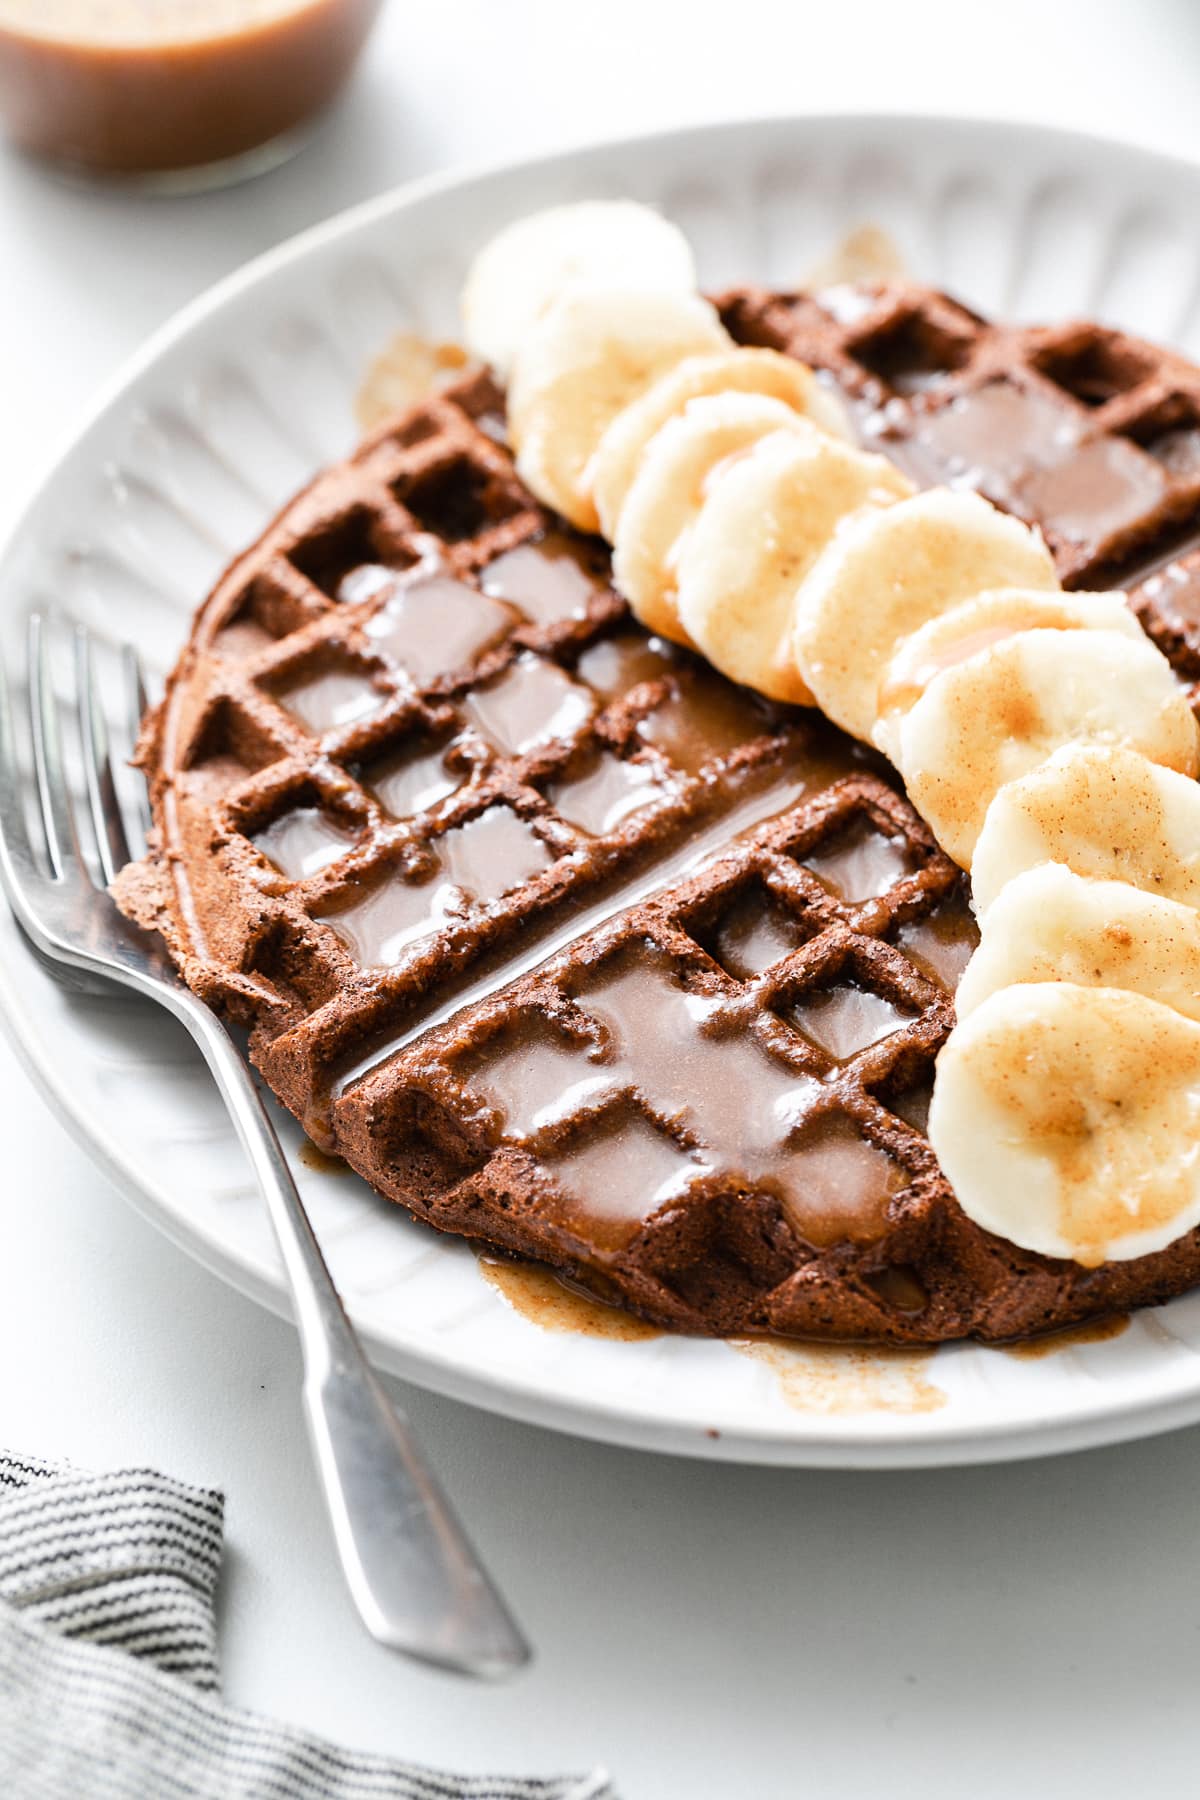 side angle view of chocolate vegan buckwheat waffles with banana and syrup.